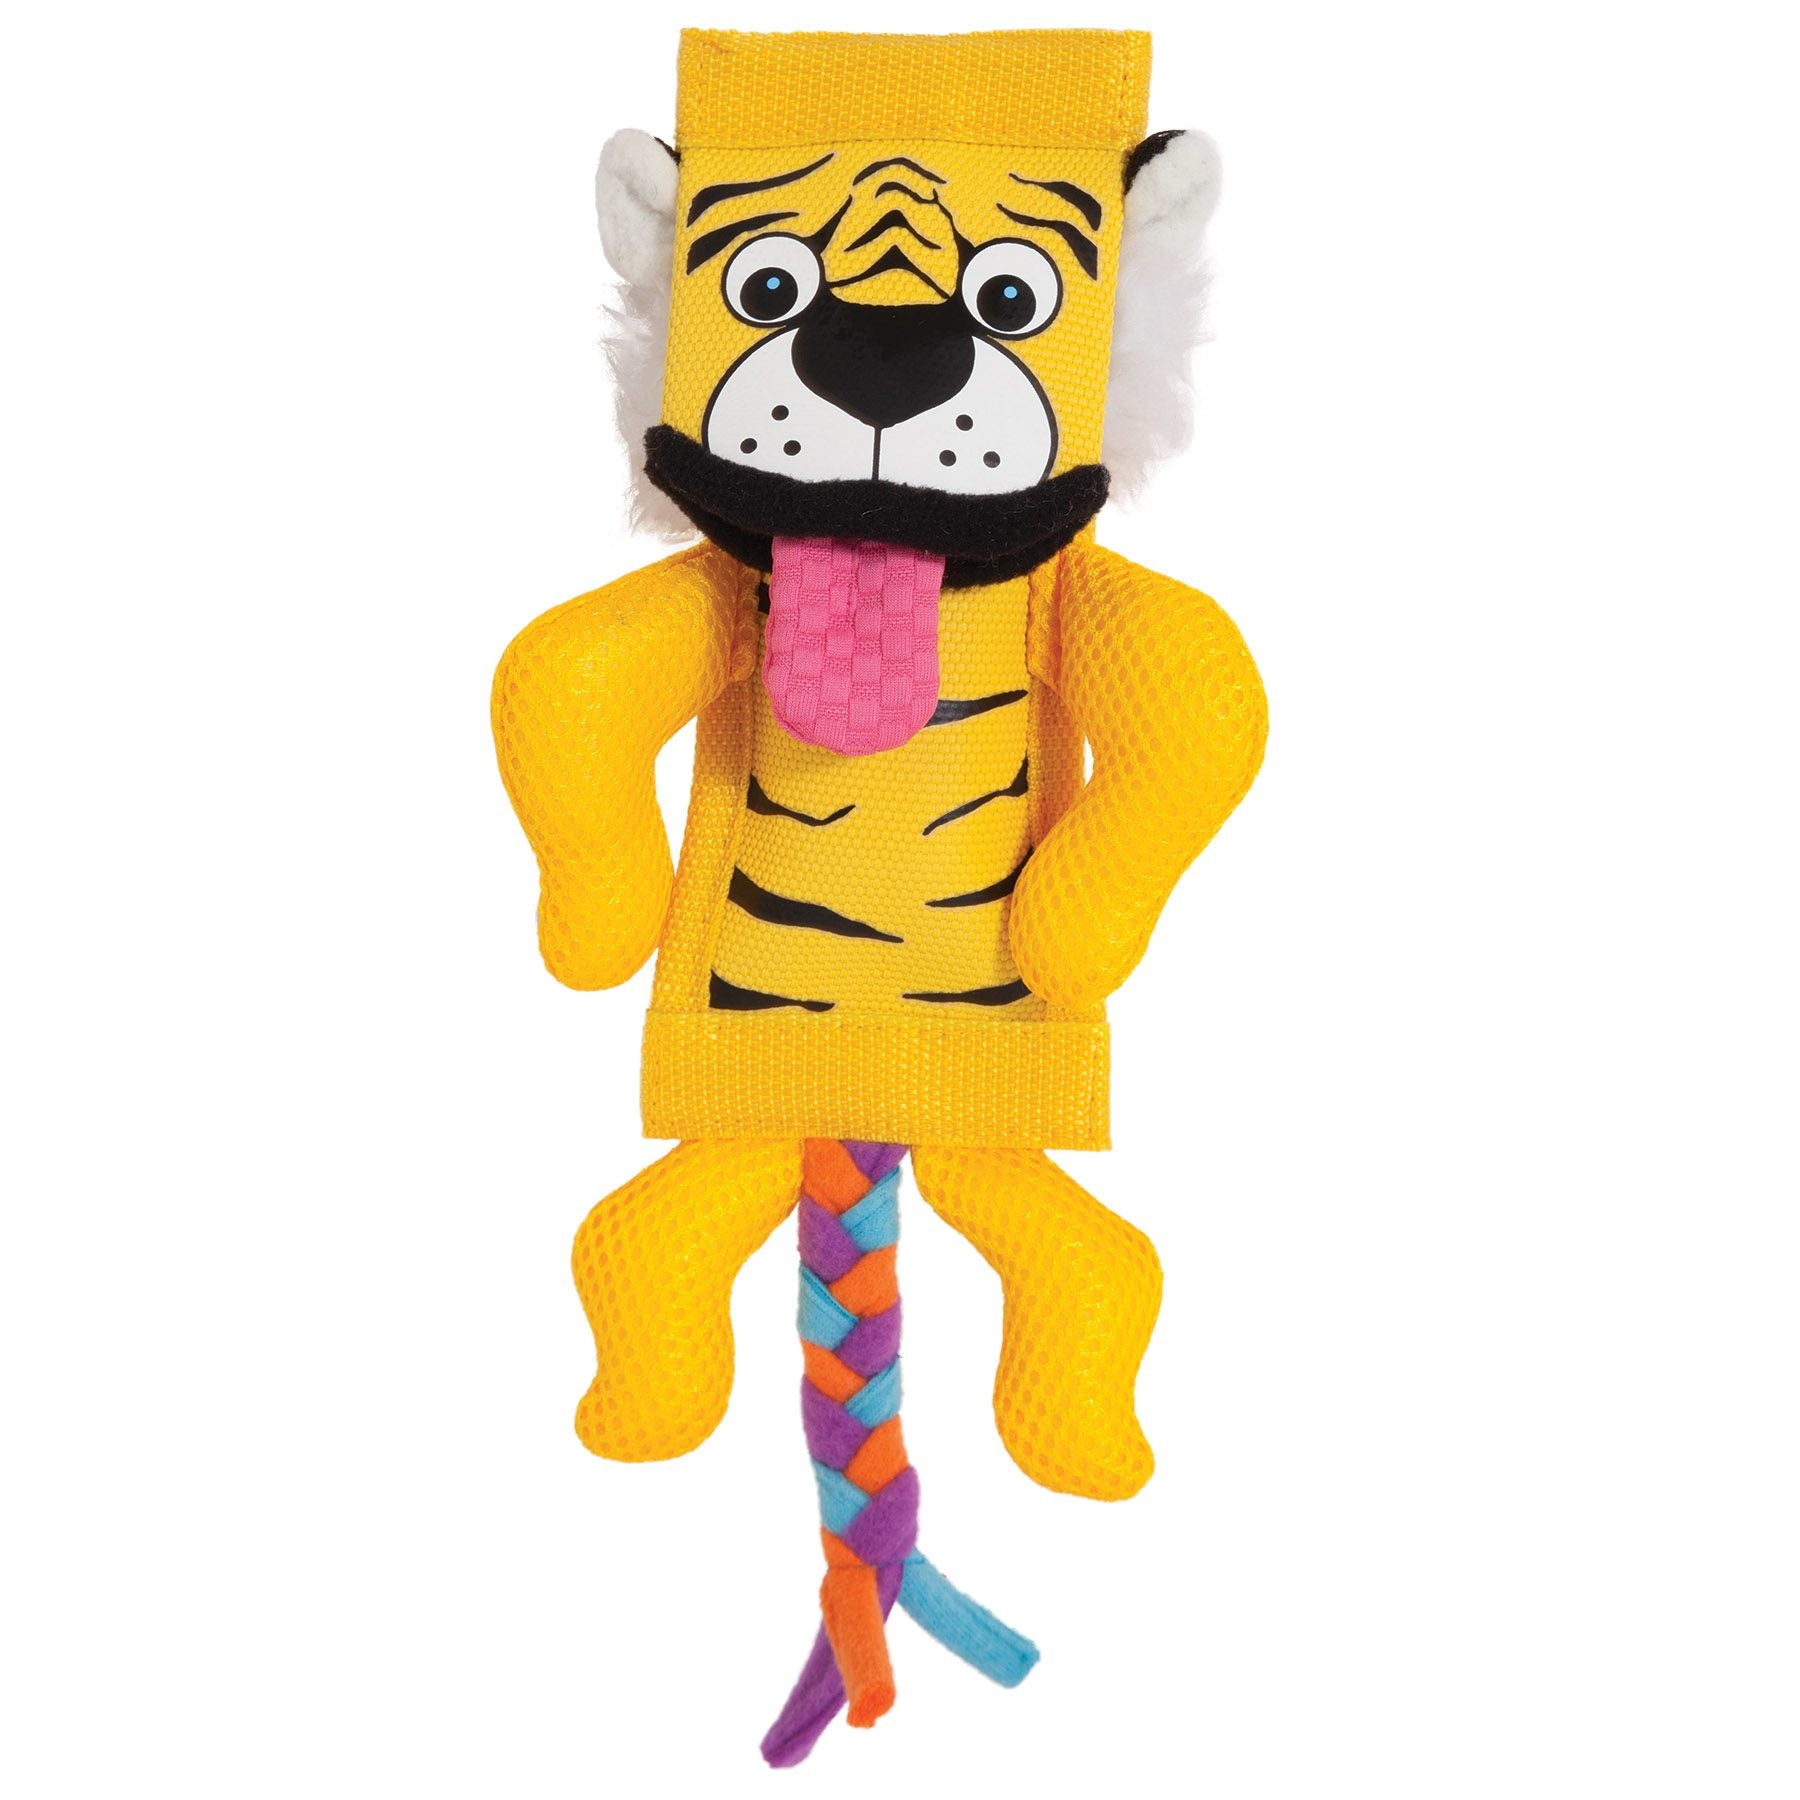 Zoobilee Firehose Toy Tiger